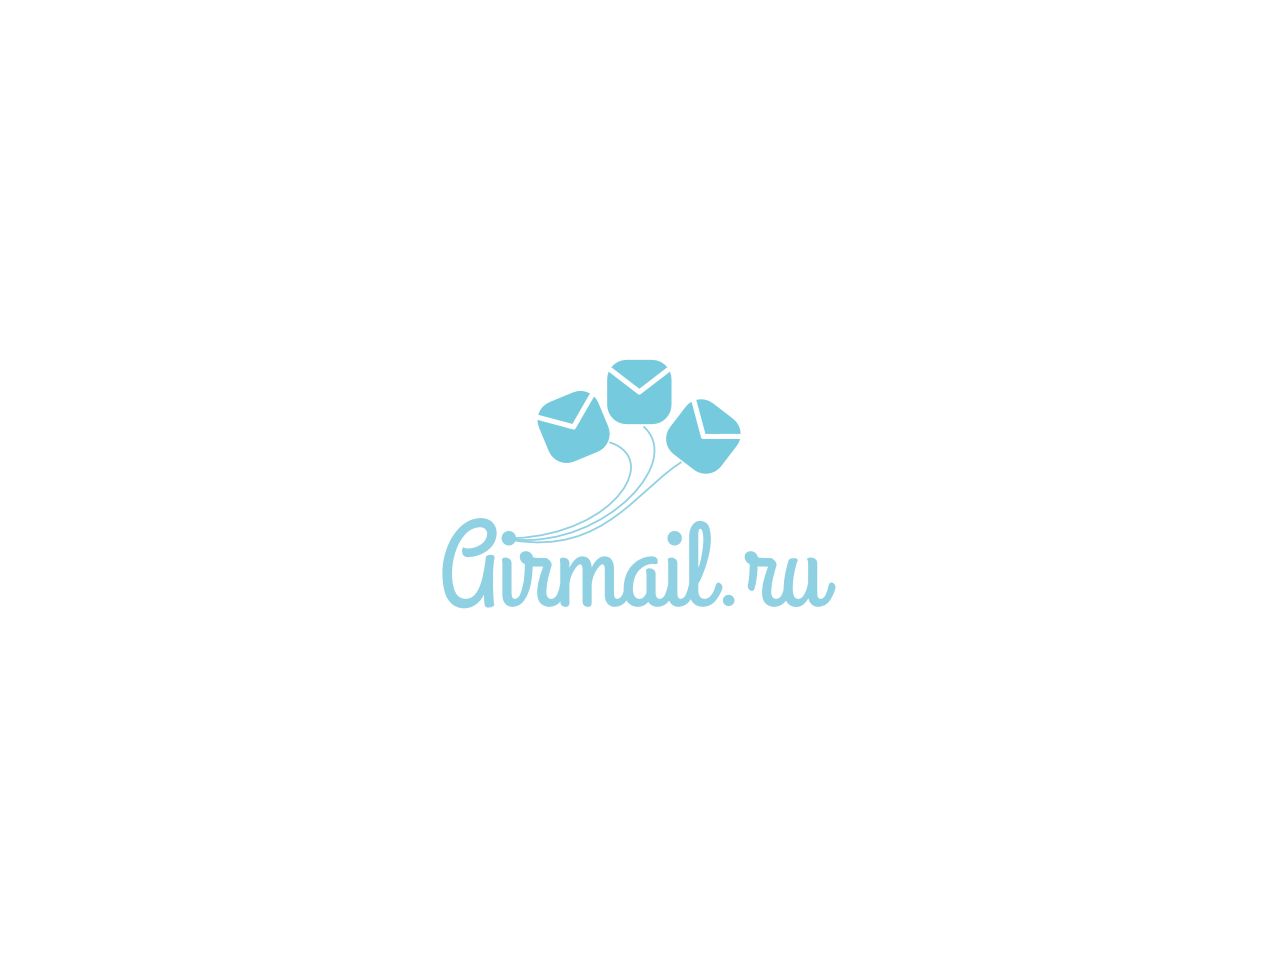 Логотип для Airmail.ru - дизайнер traffikante